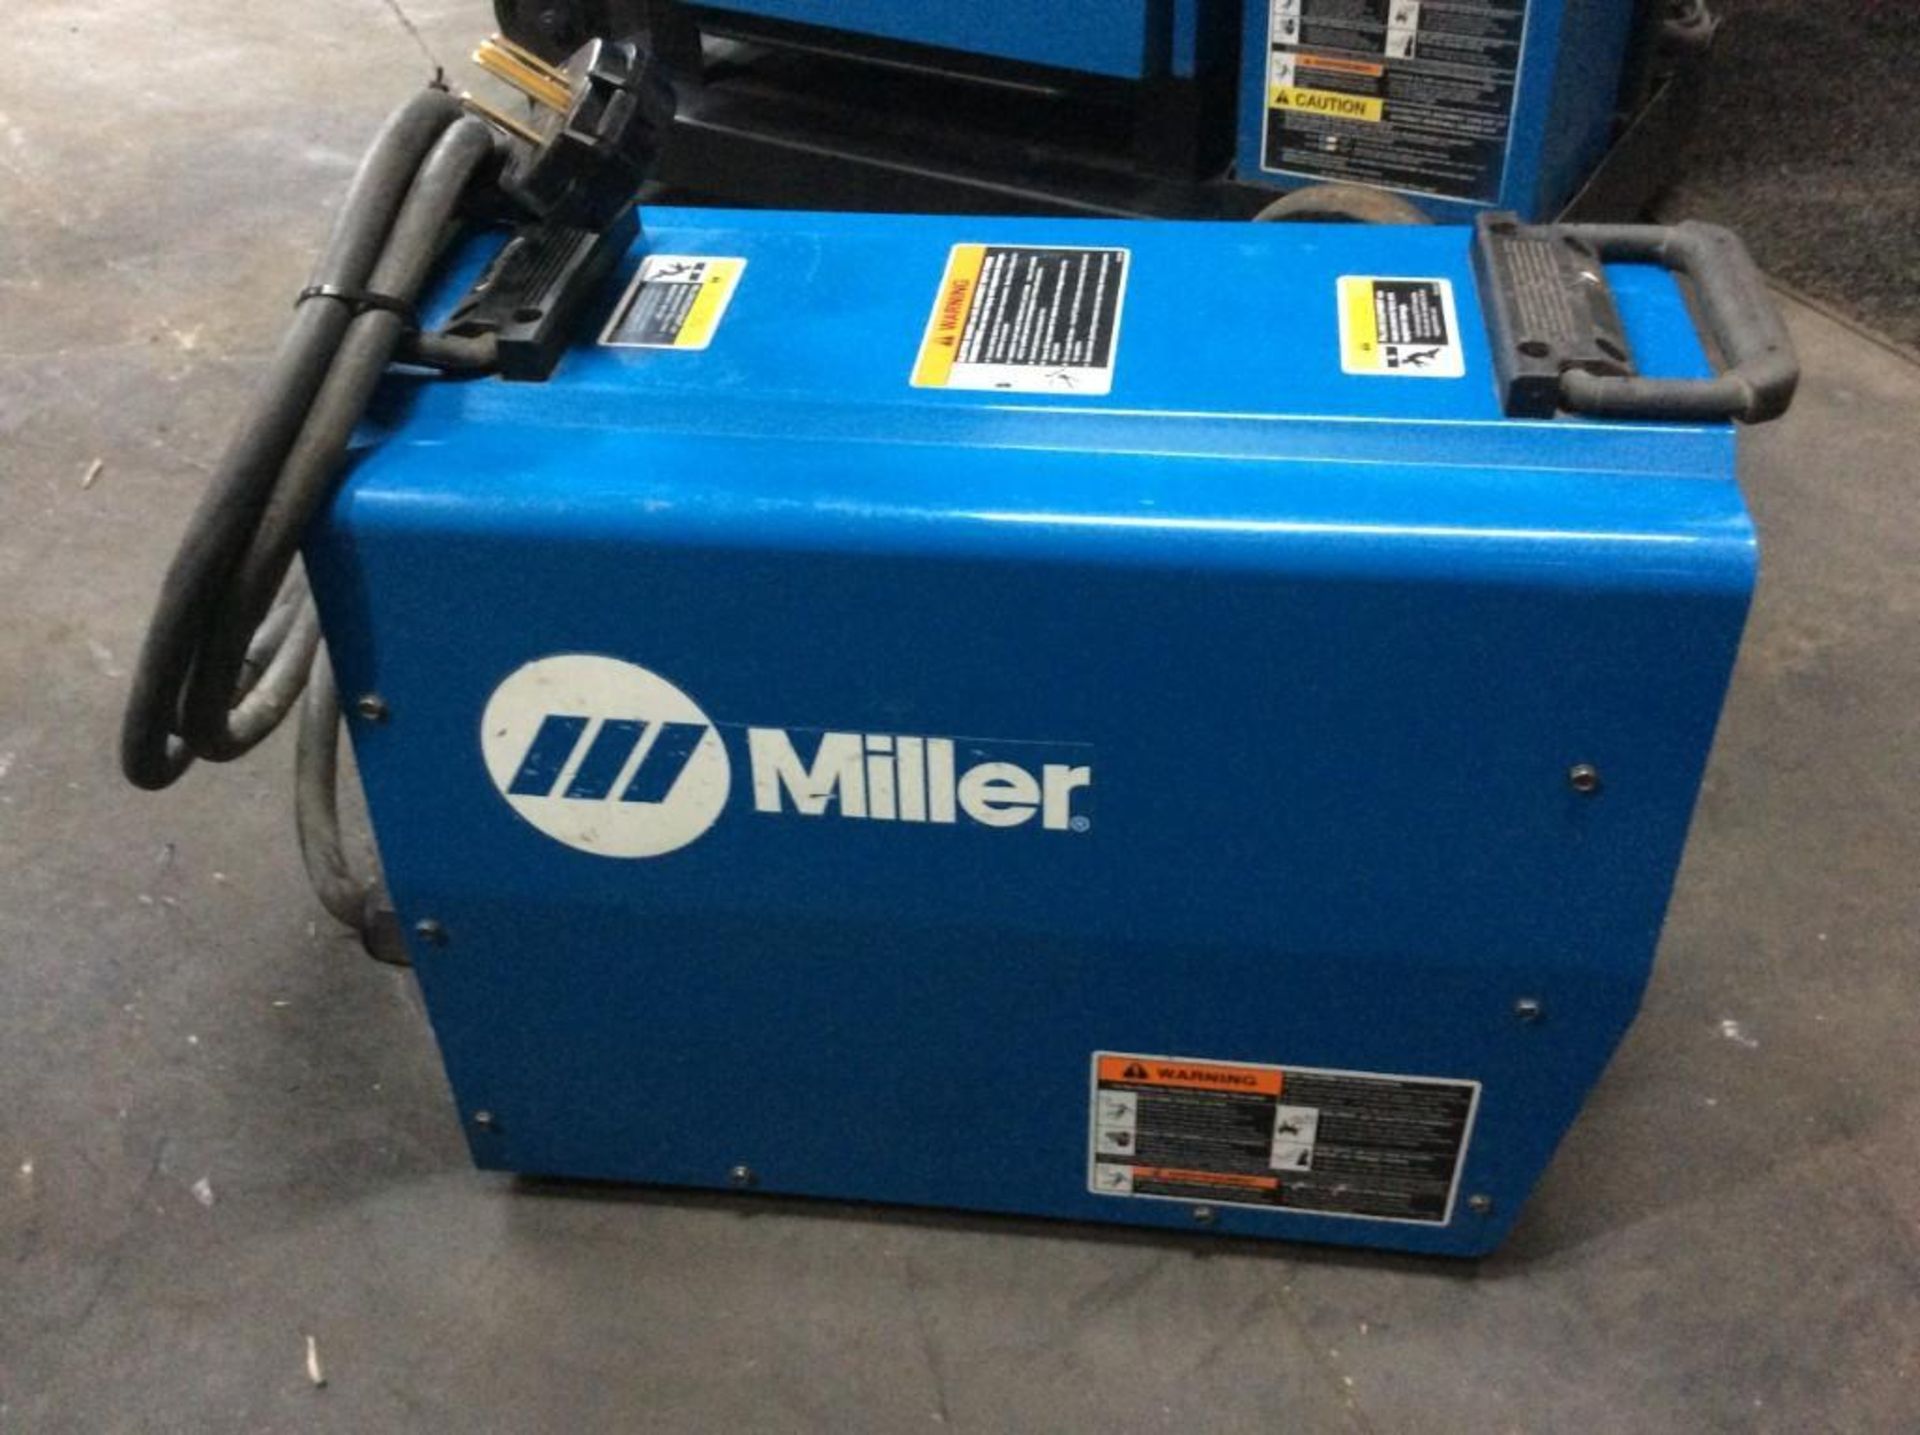 Miller XMT 304 Power Source MIG Welder